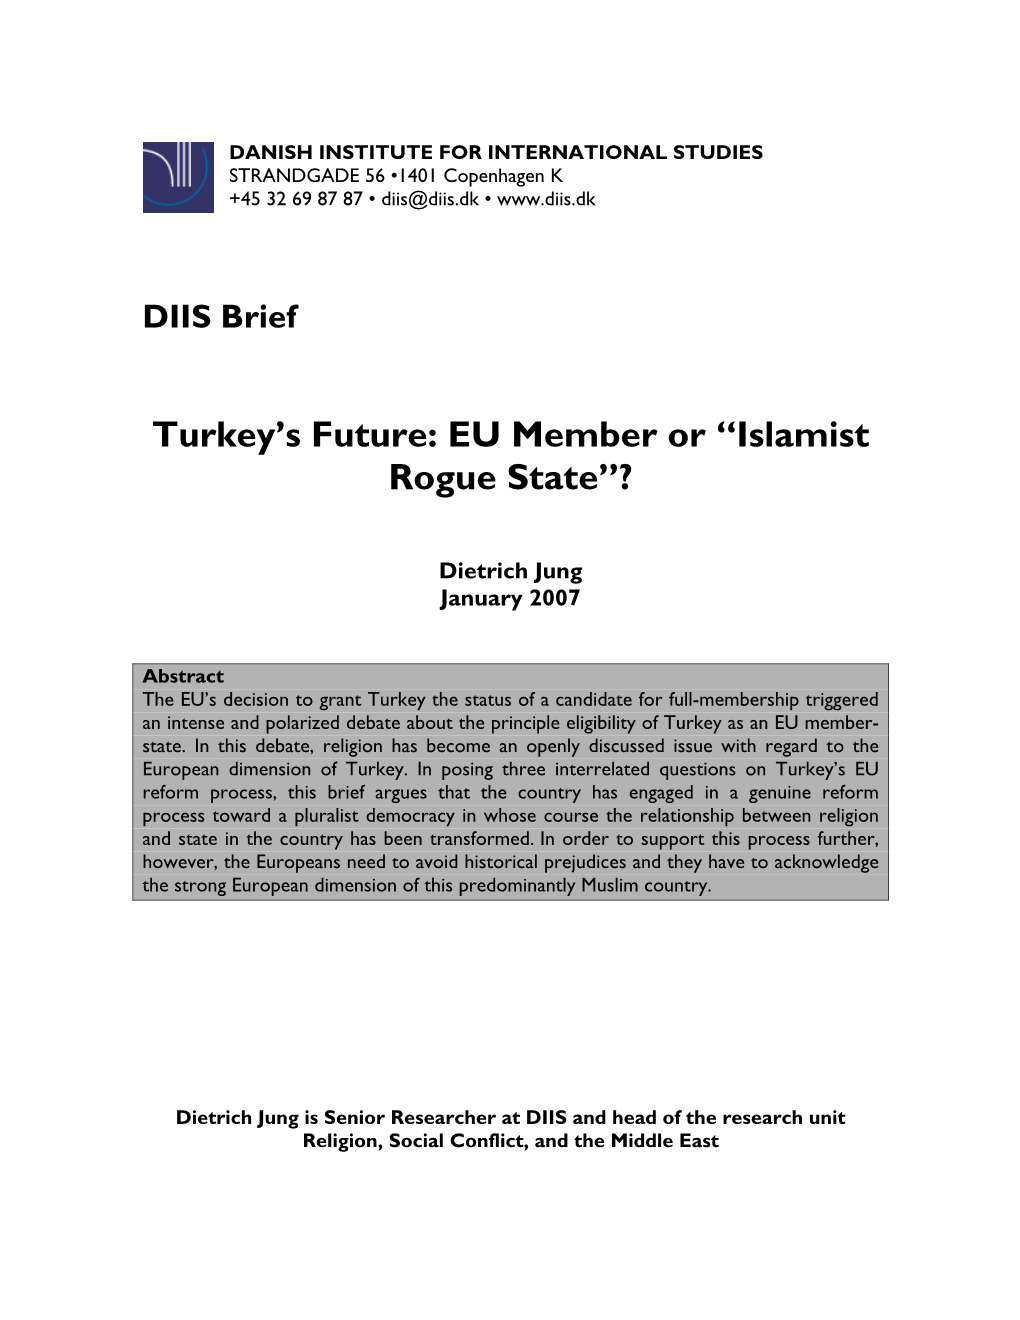 Turkey's Future: EU Member Or “Islamist Rogue State”?